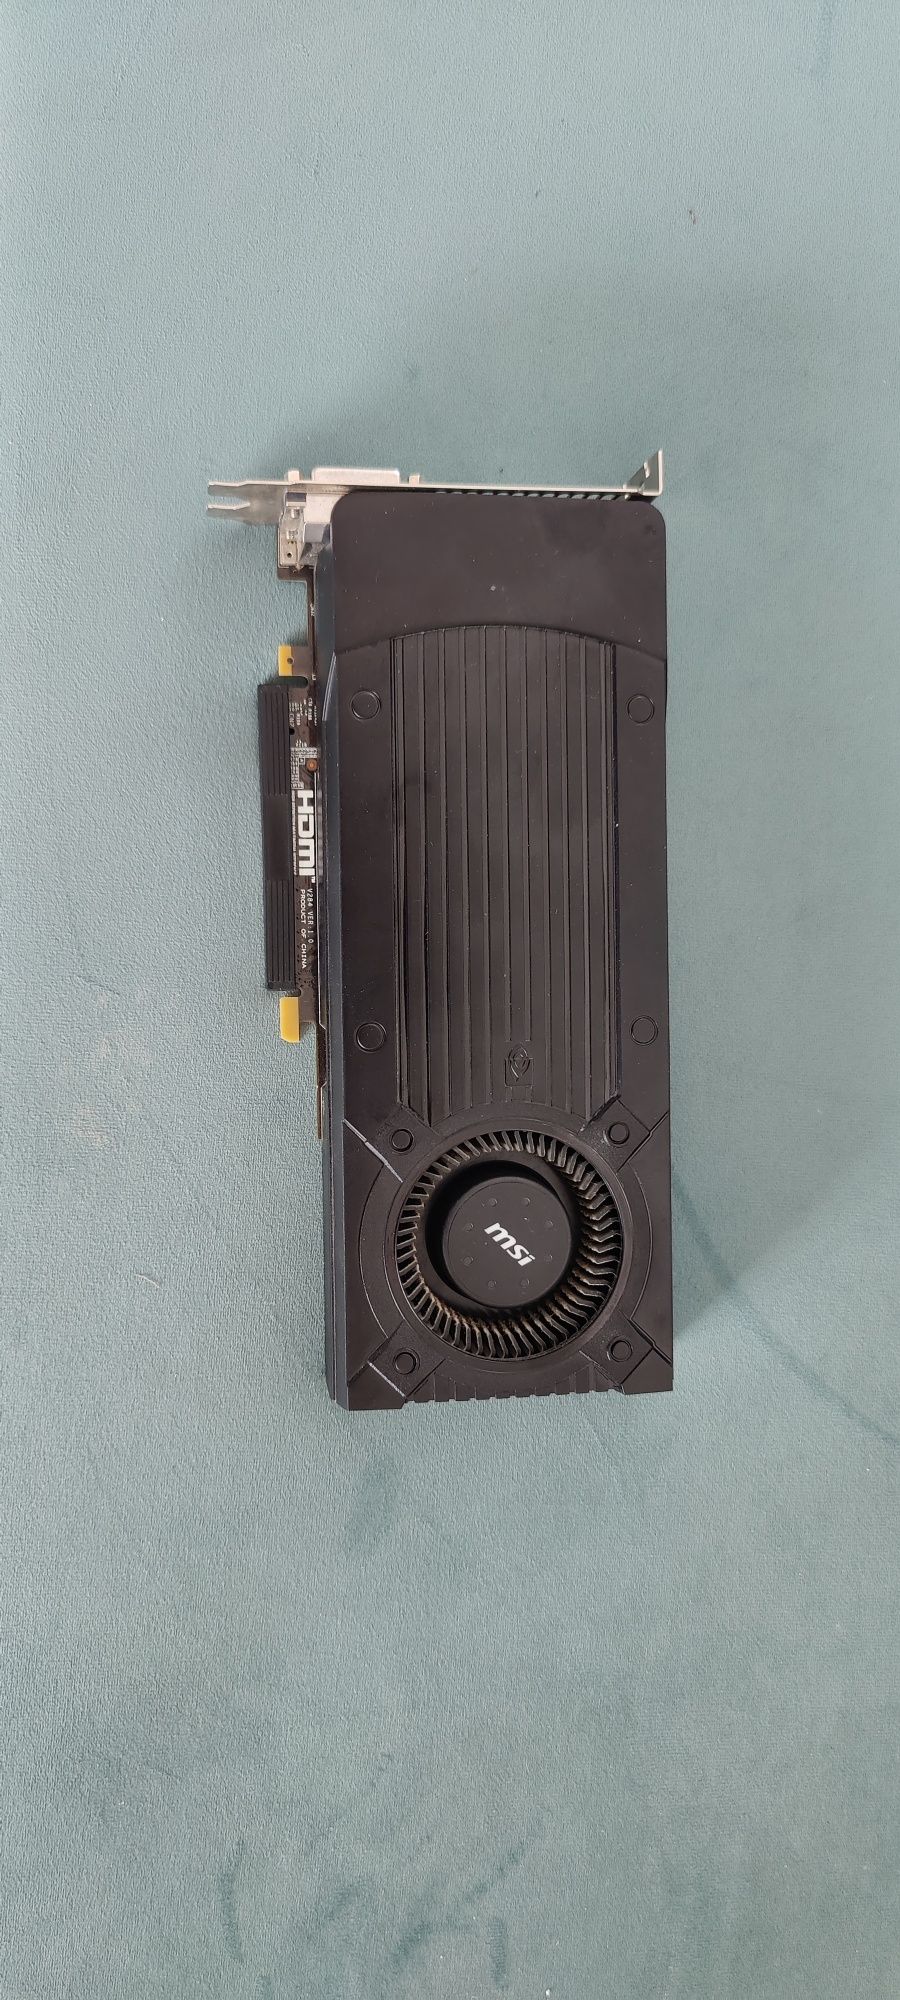 Nvidia GeForce GTX 660